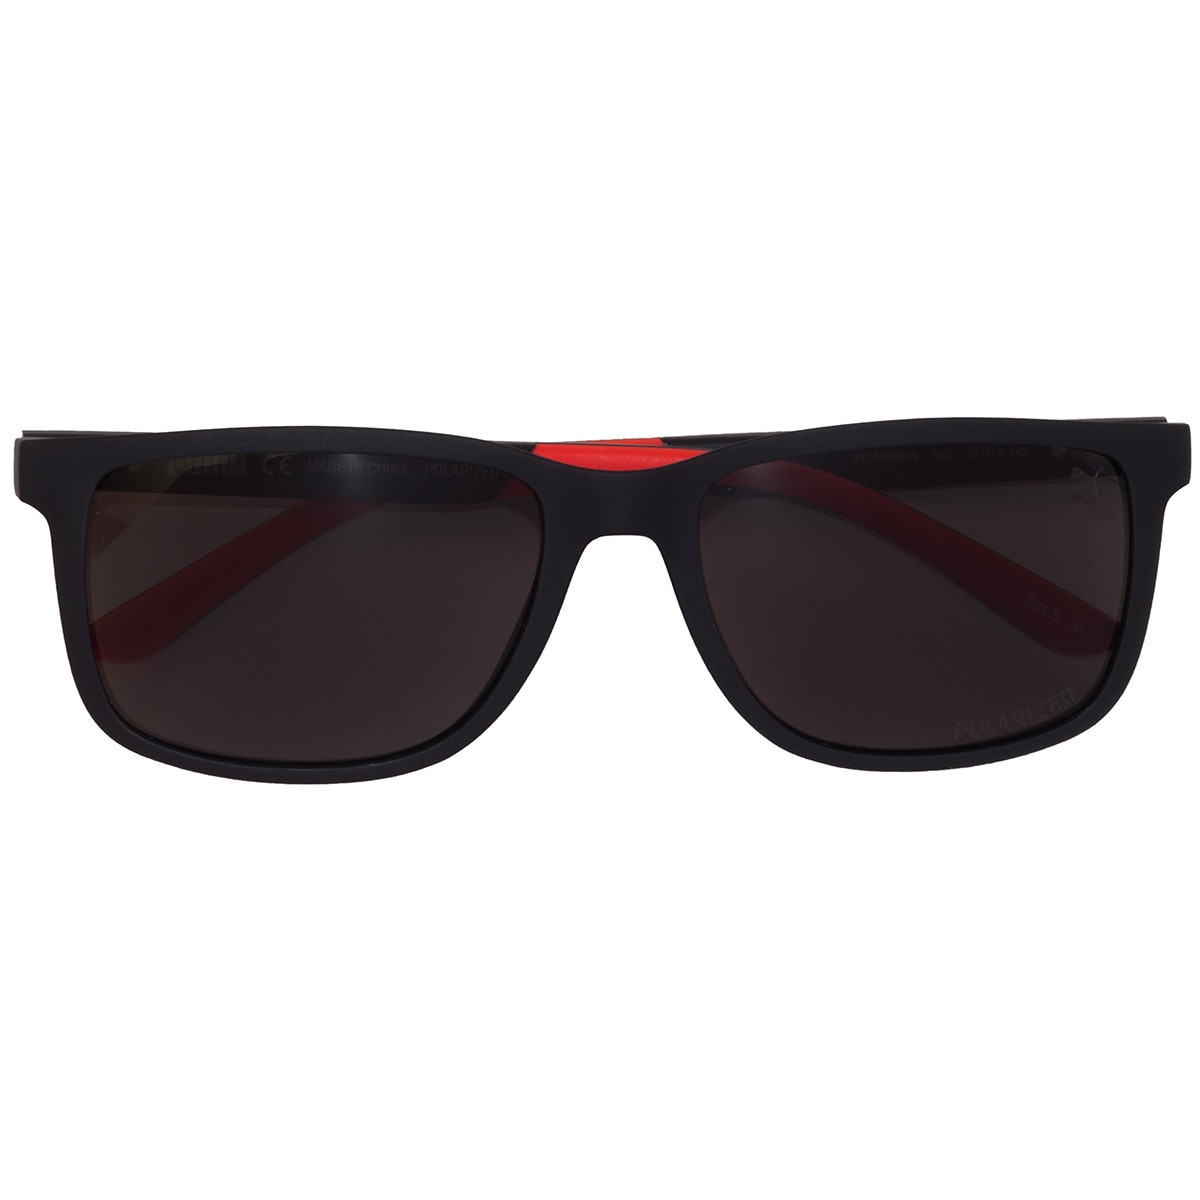 puma sunglasses costco review